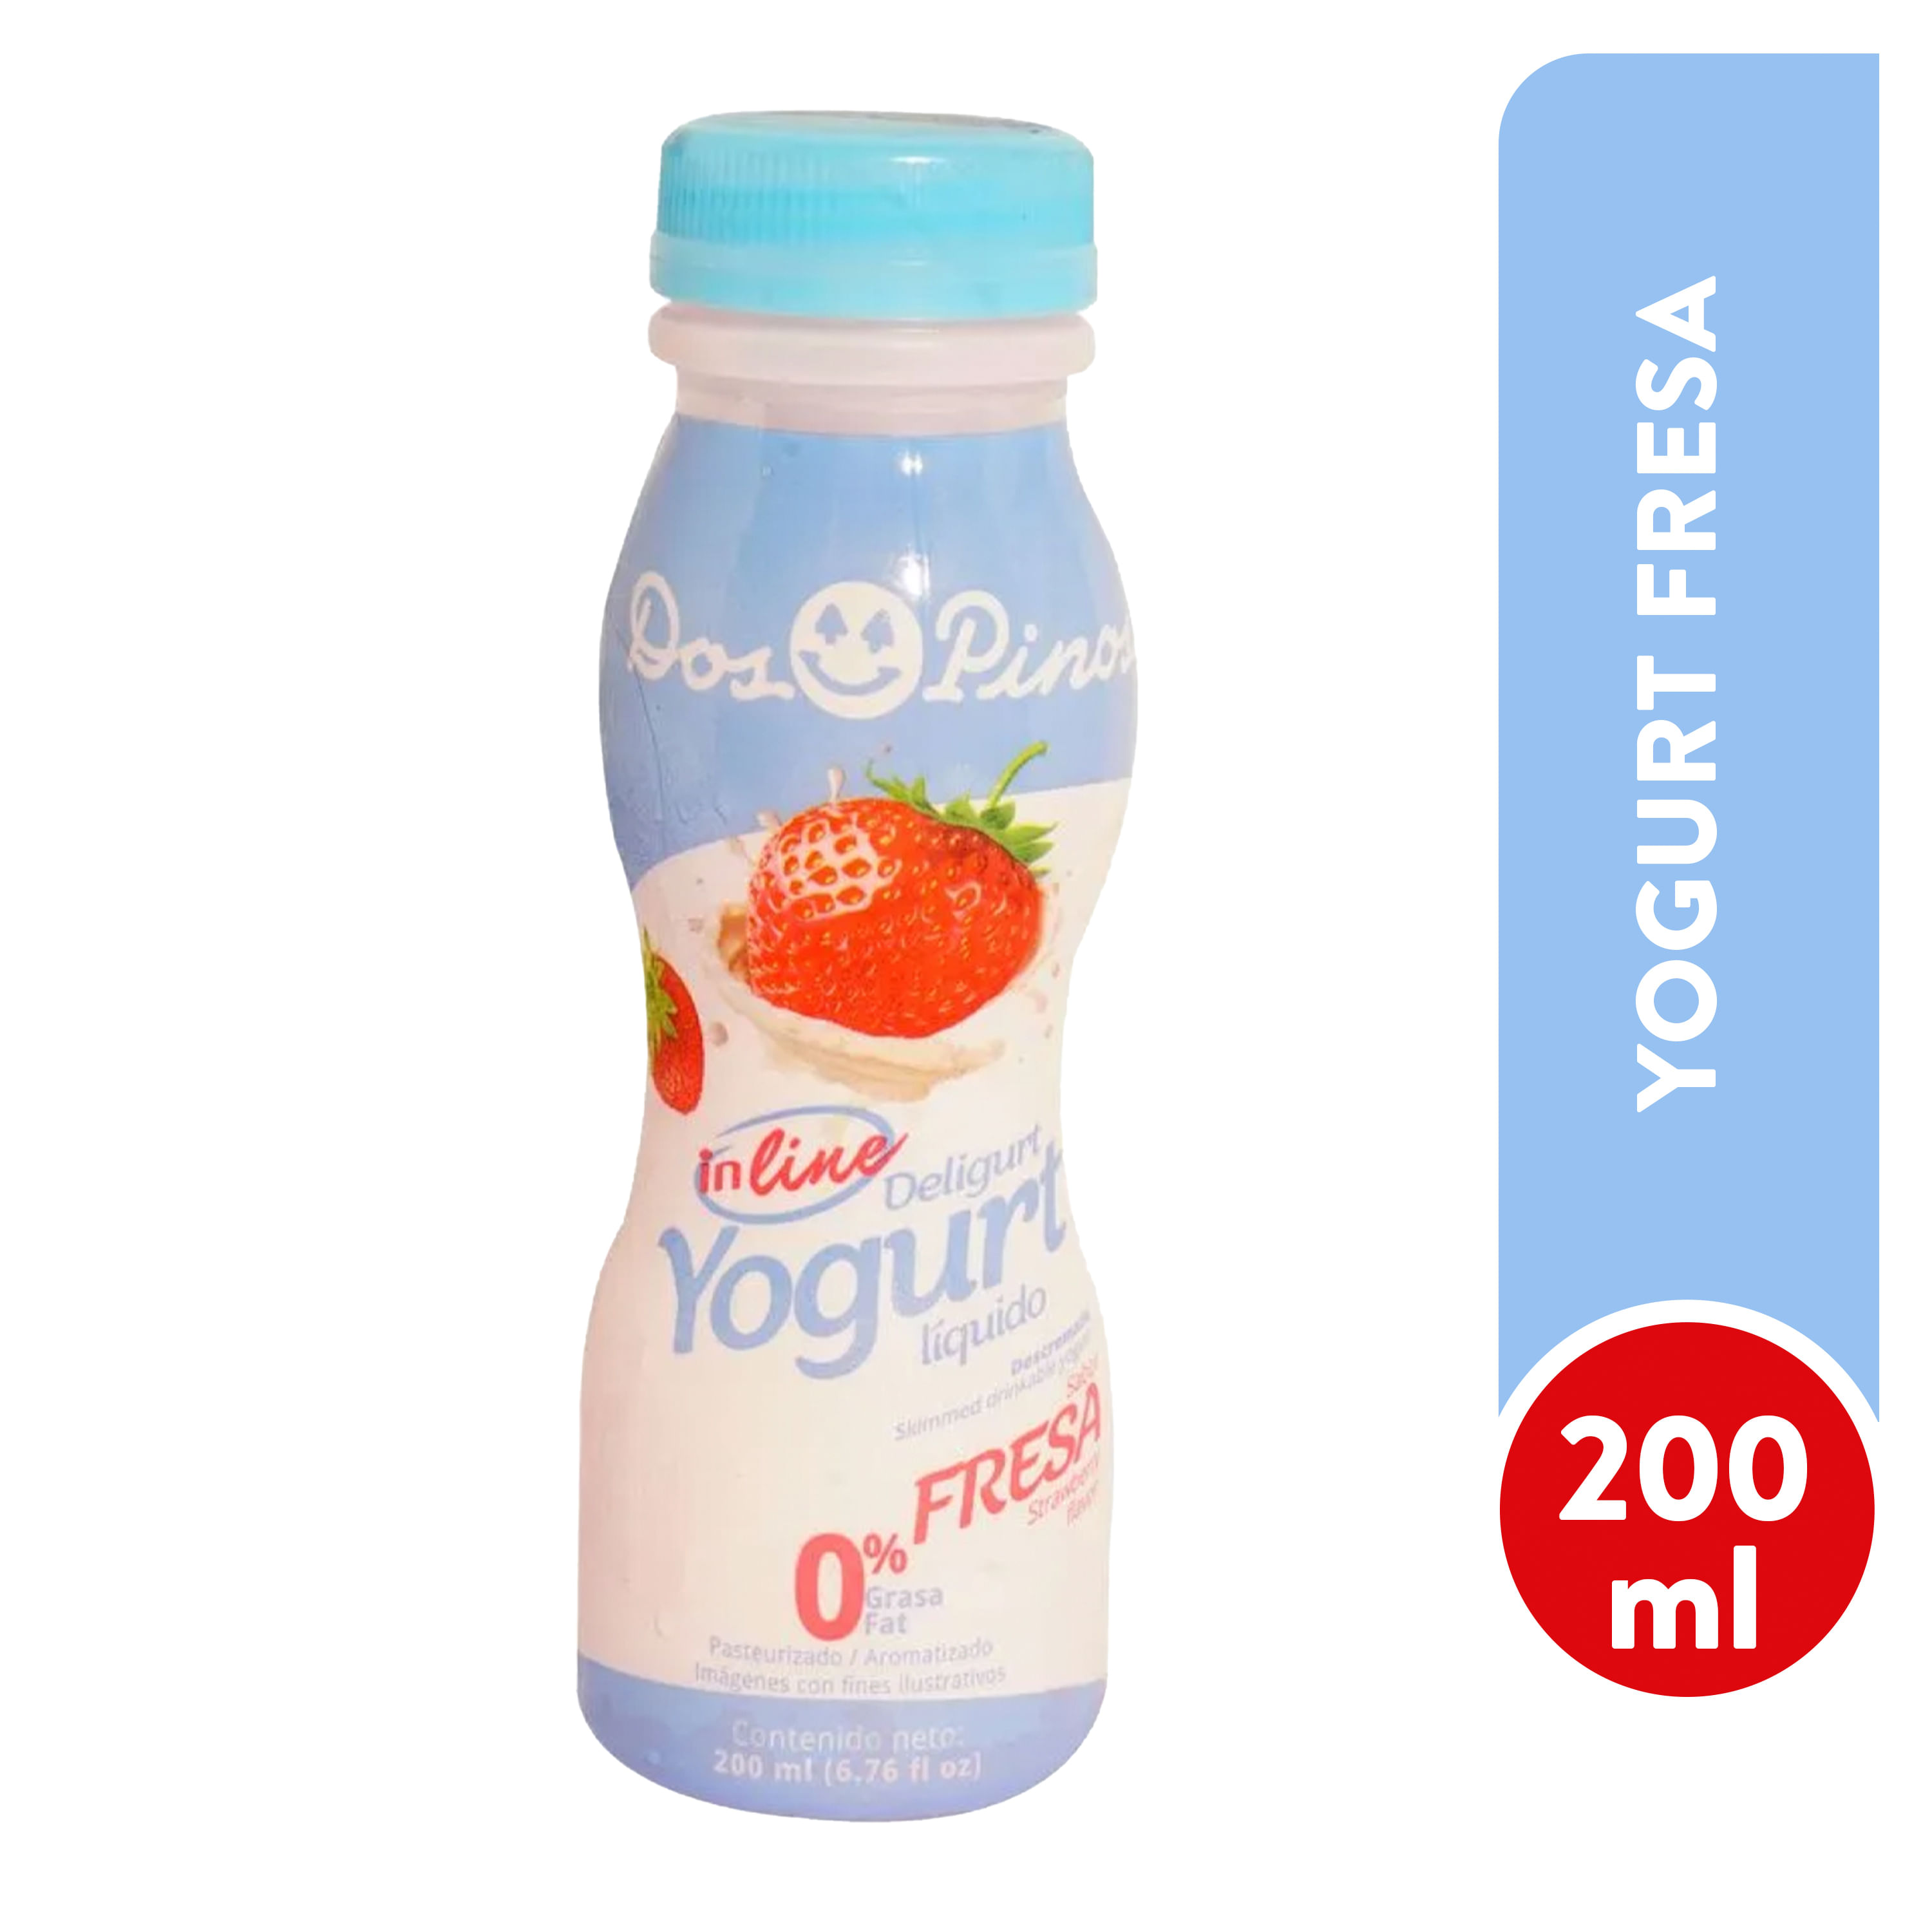 Yogurt-Dos-Pinos-Fresa-Inline-200ml-1-32567